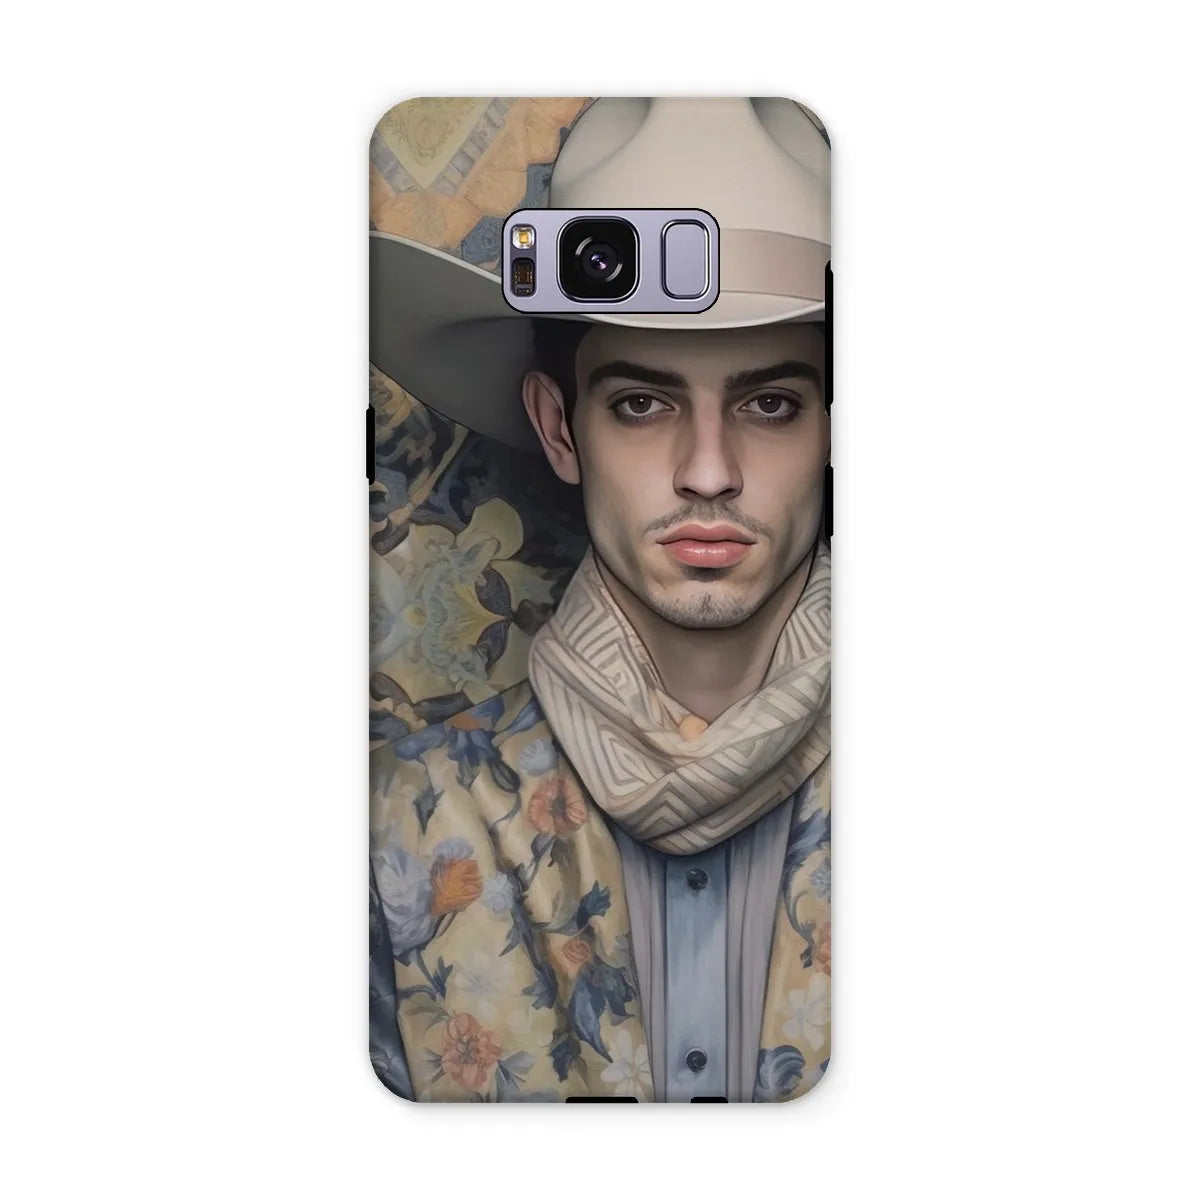 Farzad The Gay Cowboy - Dandy Gay Men Art Phone Case - Samsung Galaxy S8 Plus / Matte - Mobile Phone Cases - Aesthetic